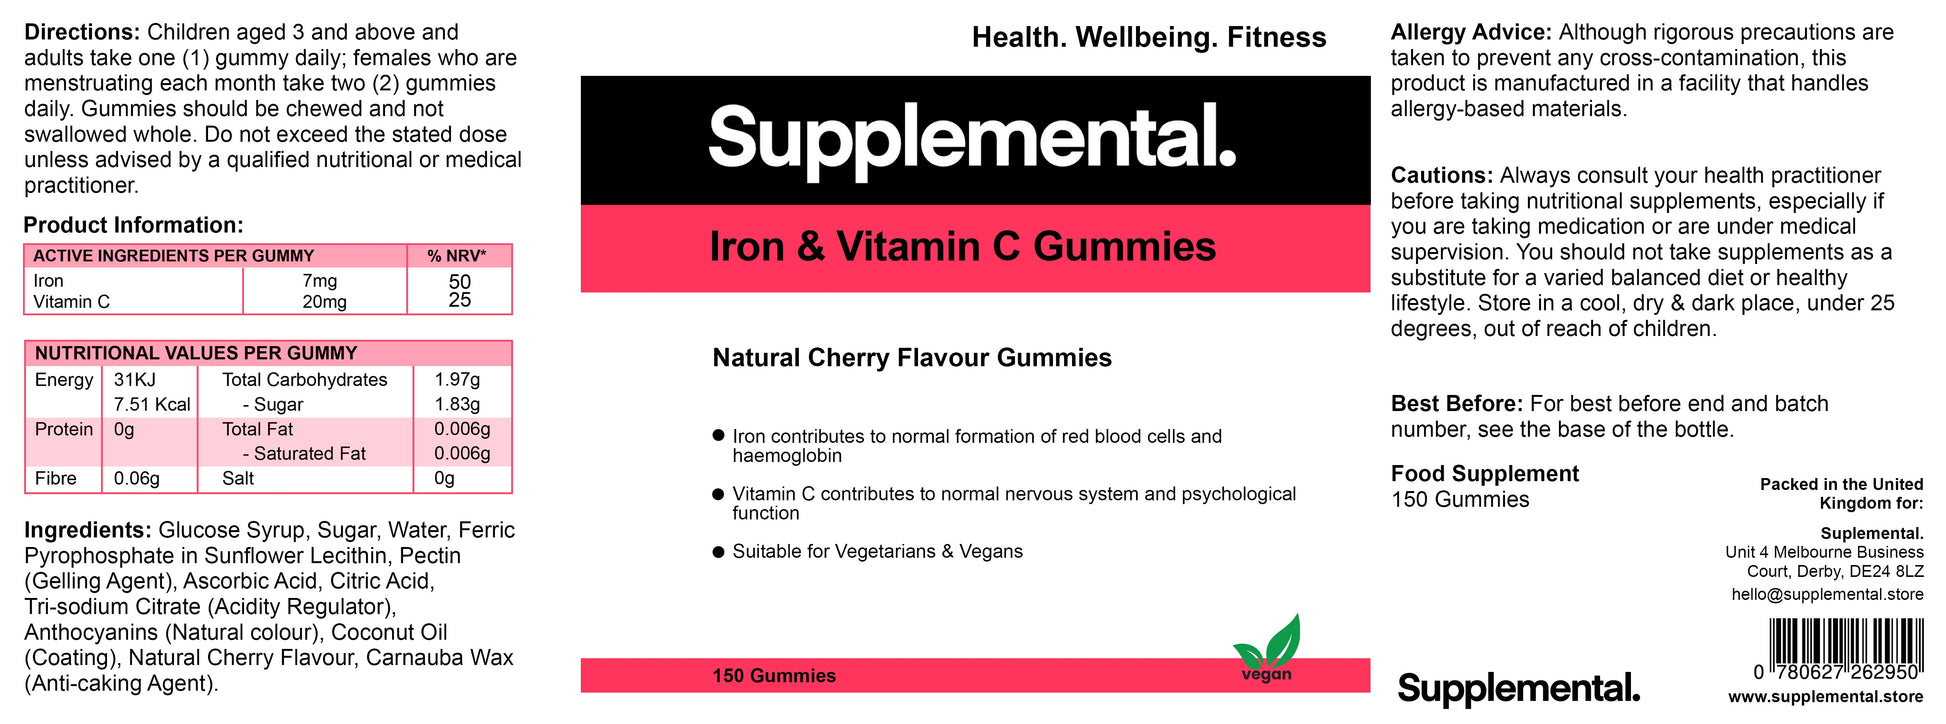 Iron & Vitamin C Gummies - Supplemental